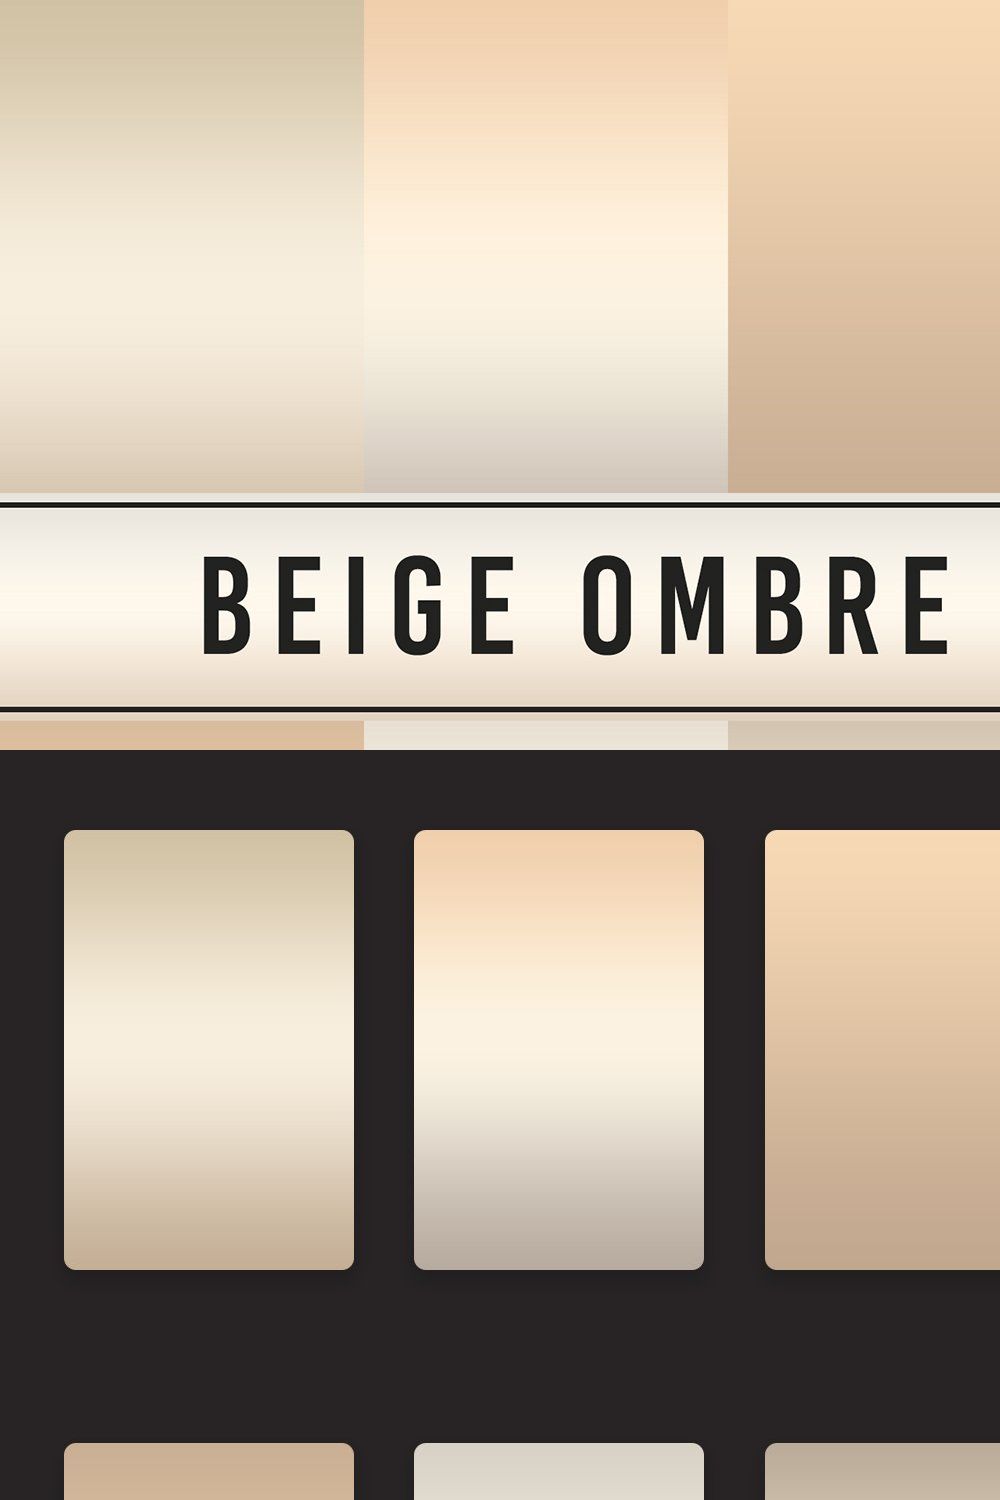 Beige Ombre Gradients pinterest preview image.